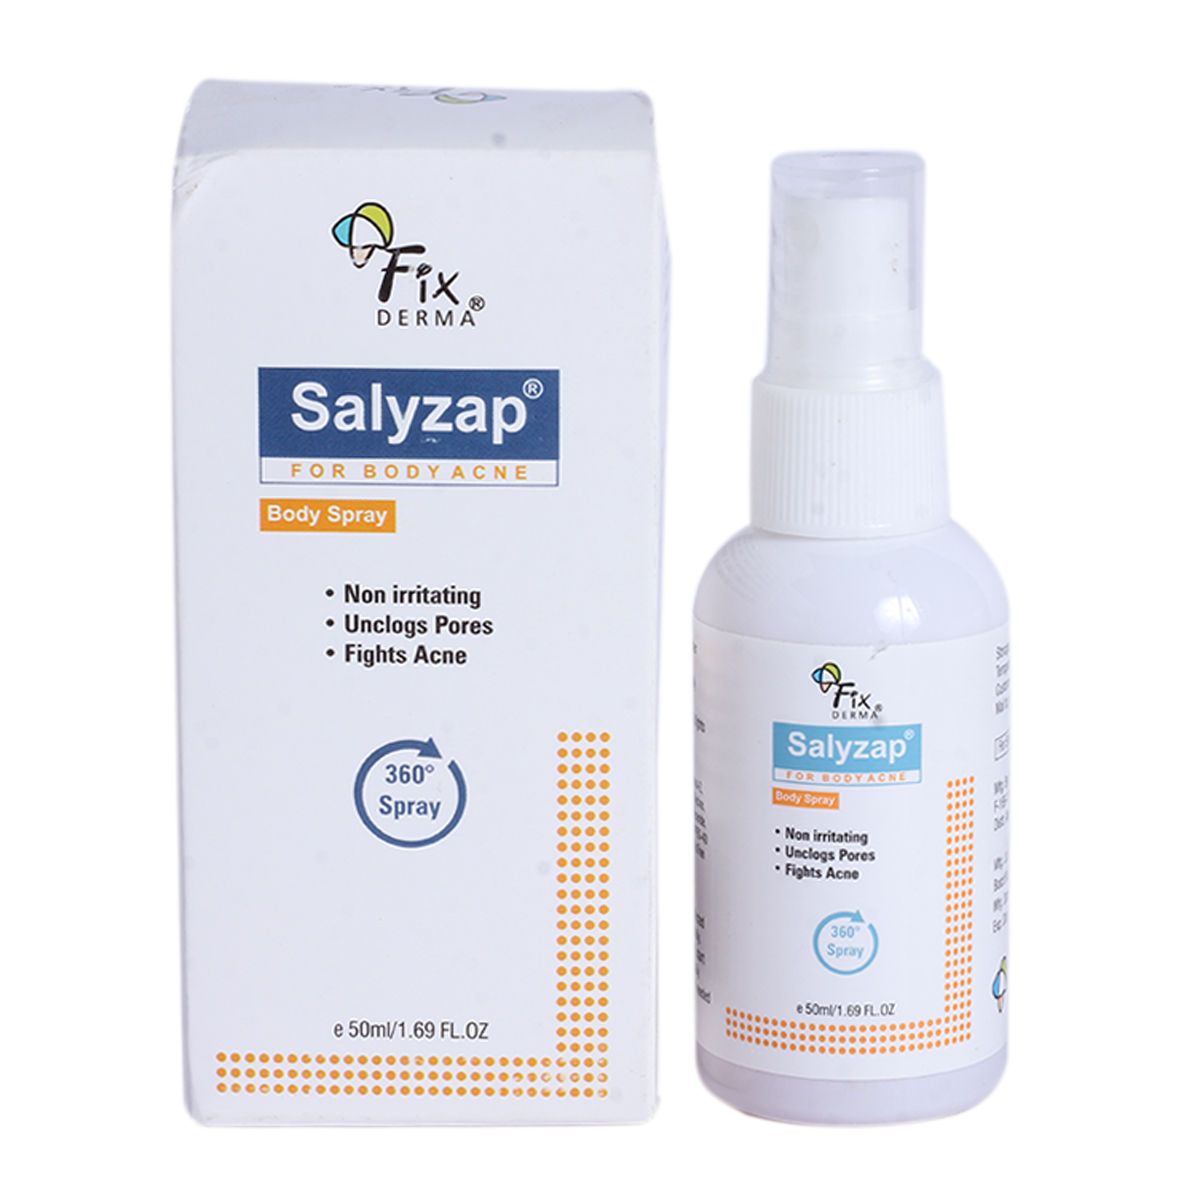 Salyzap Body Spray for Body Acne, 50 gm, Pack of 1 